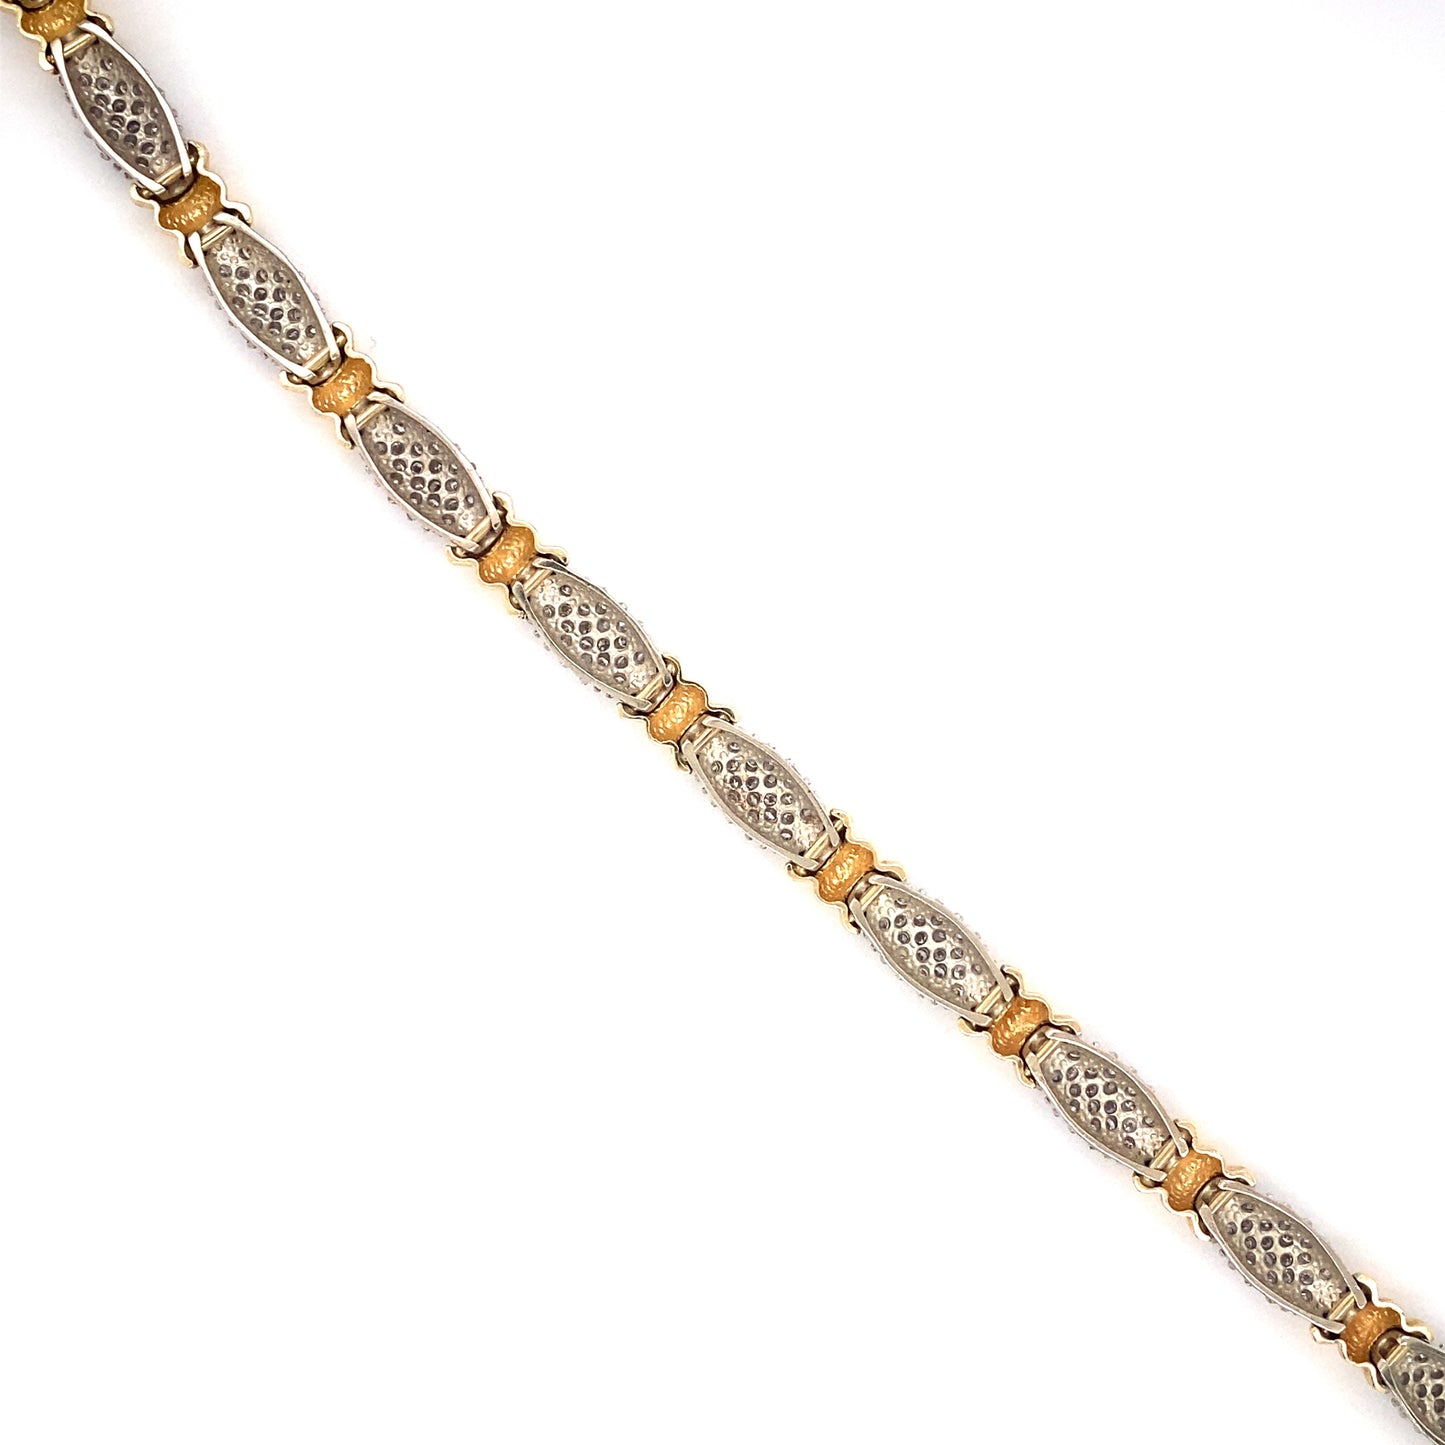 Circa 1990s 4.9 Carat Diamond Link Bracelet in Two Tone 14K Gold